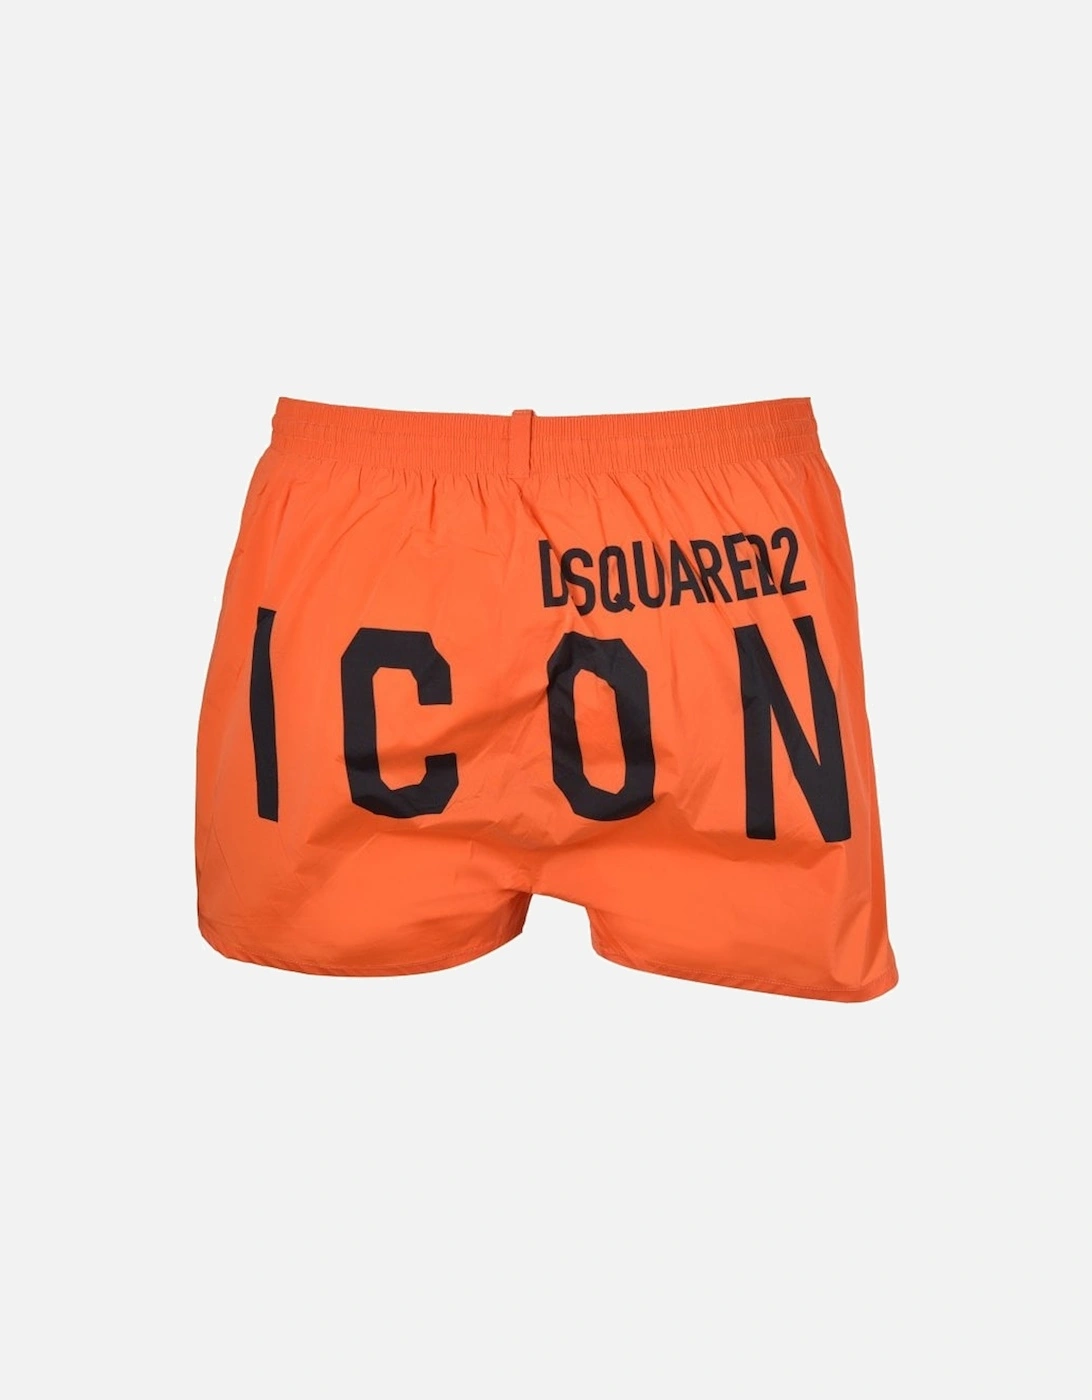 ICON Swim Shorts, Orange/black, 6 of 5